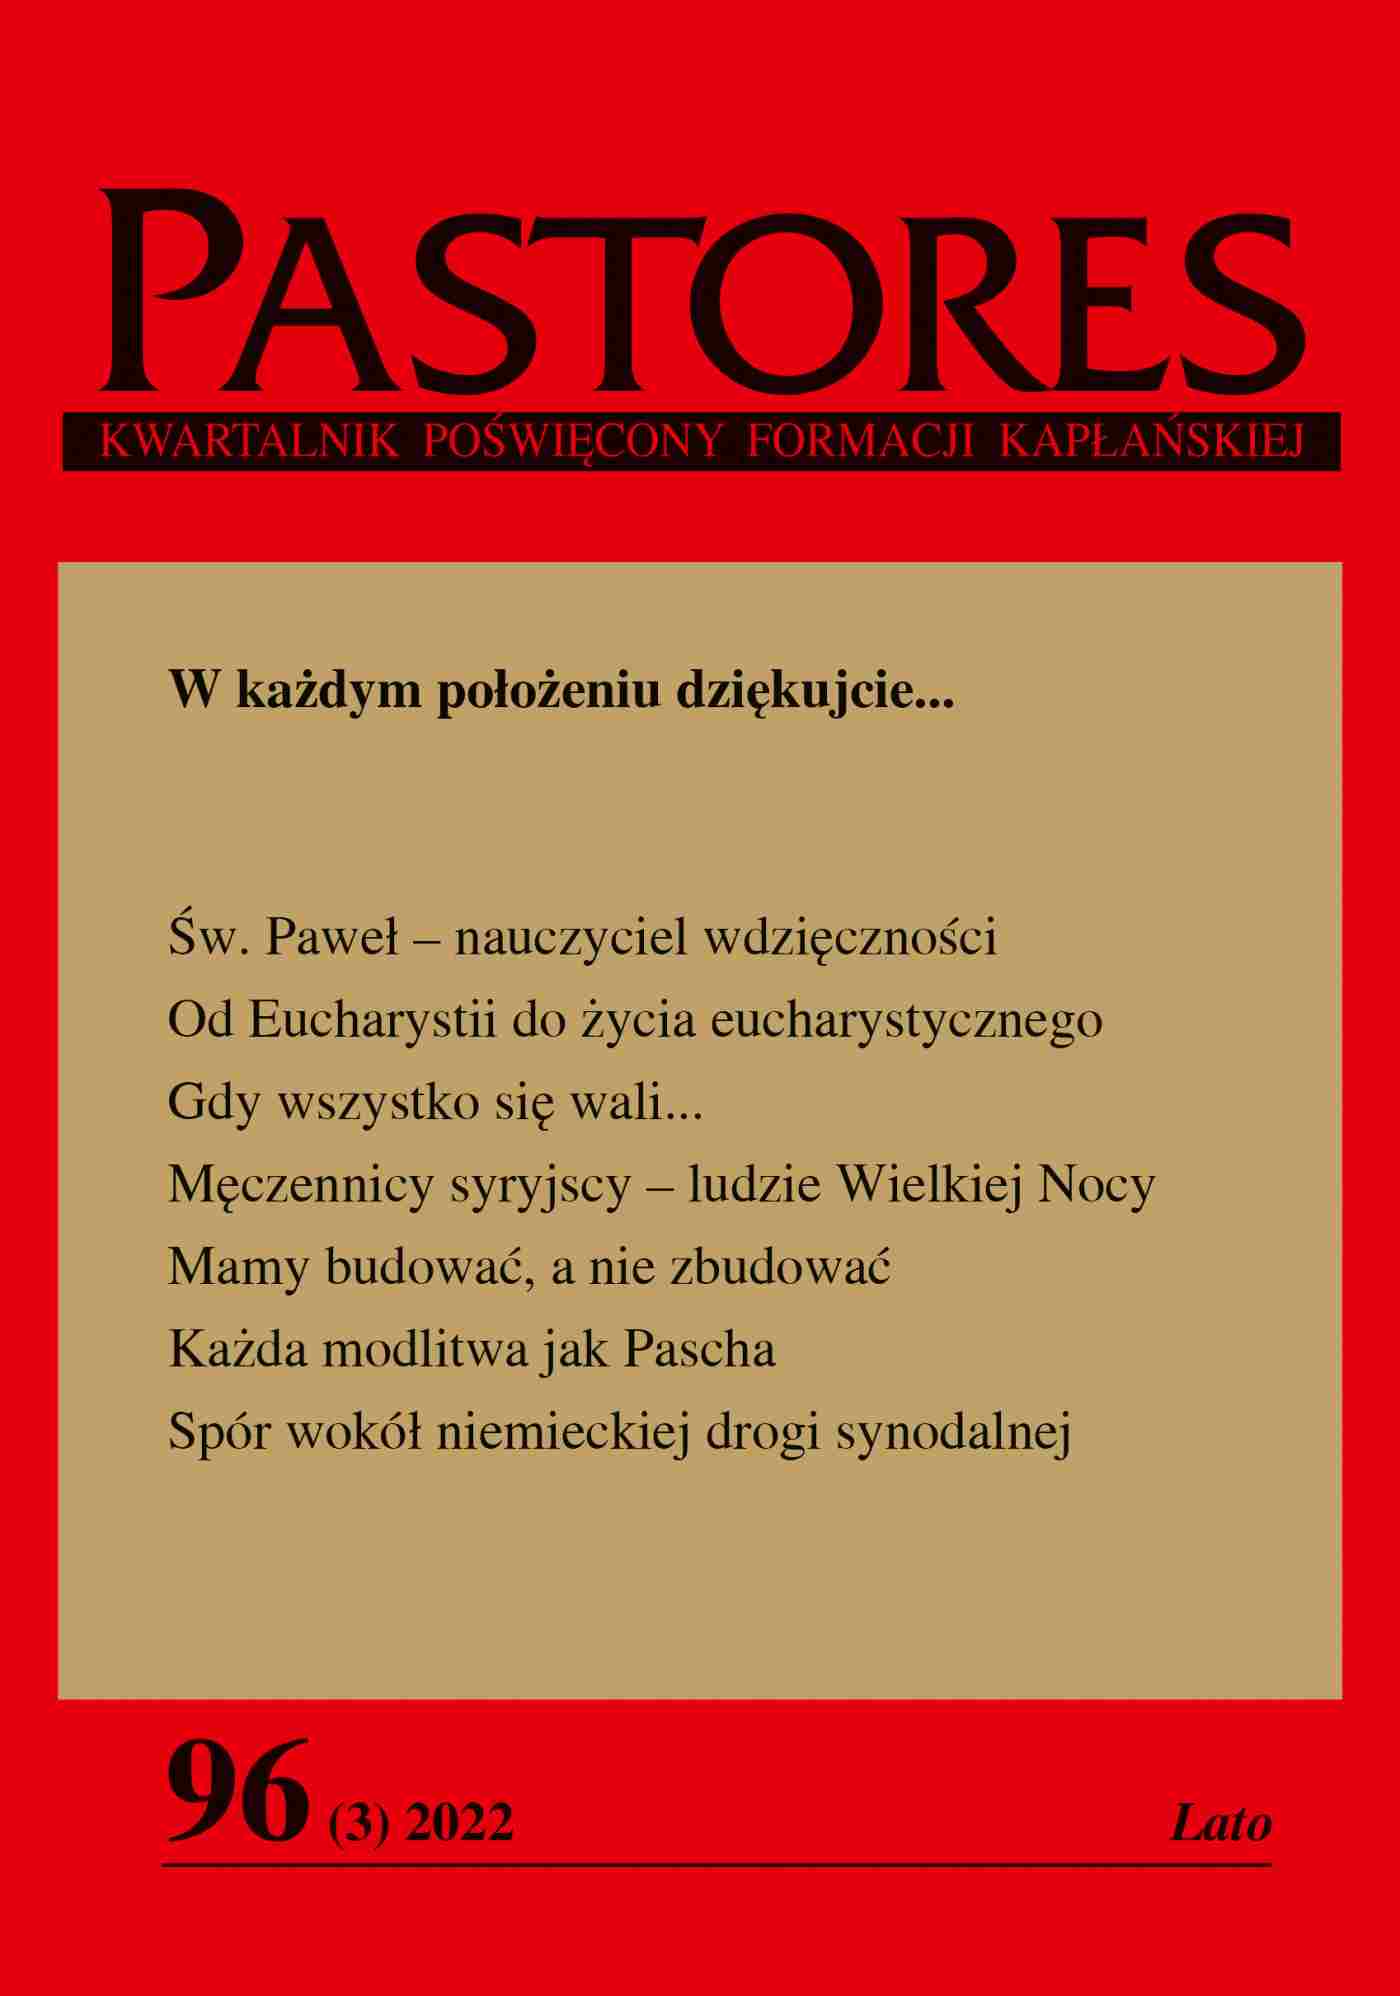 Pastores 96 (3) 2022 lato - Ebook (Książka EPUB) do pobrania w formacie EPUB